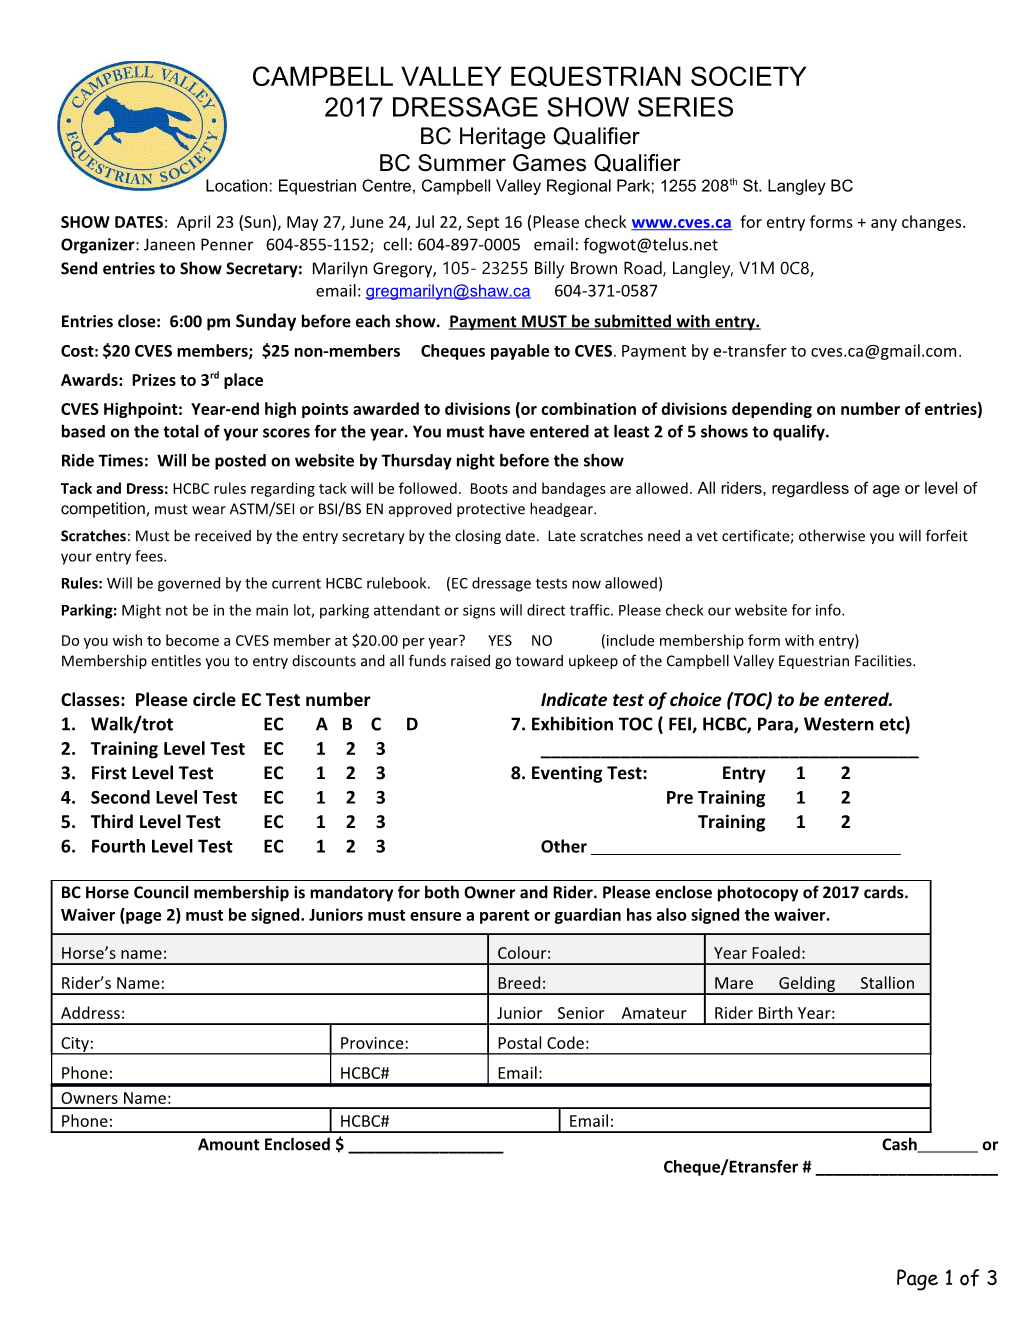 CVES Dressage Show Entry Form